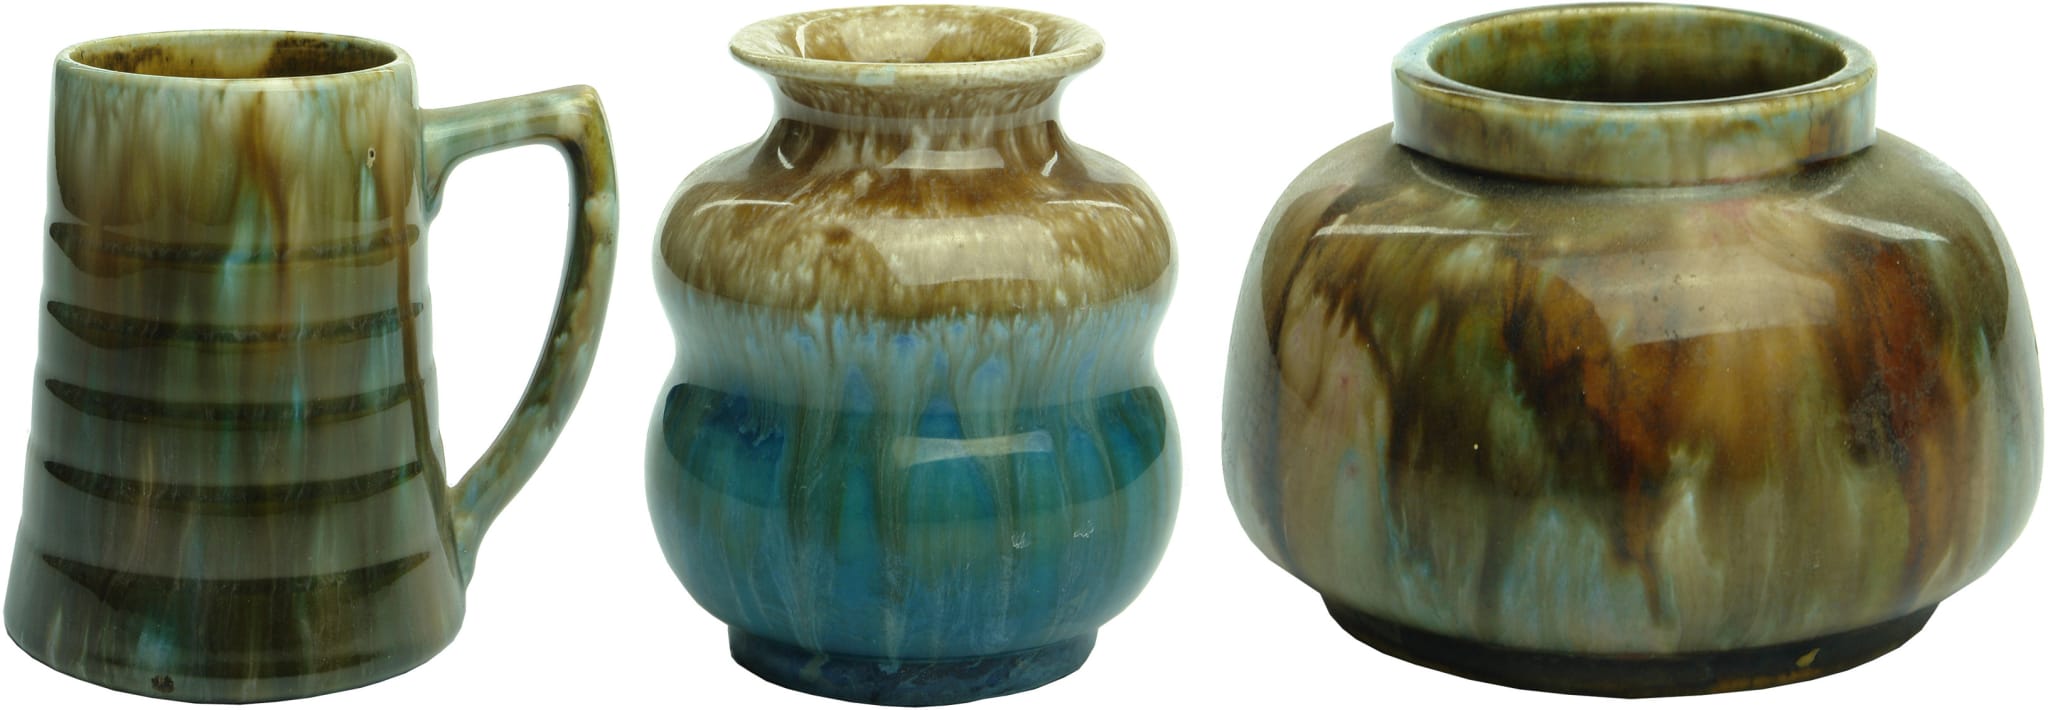 Mashman Pottery Vases